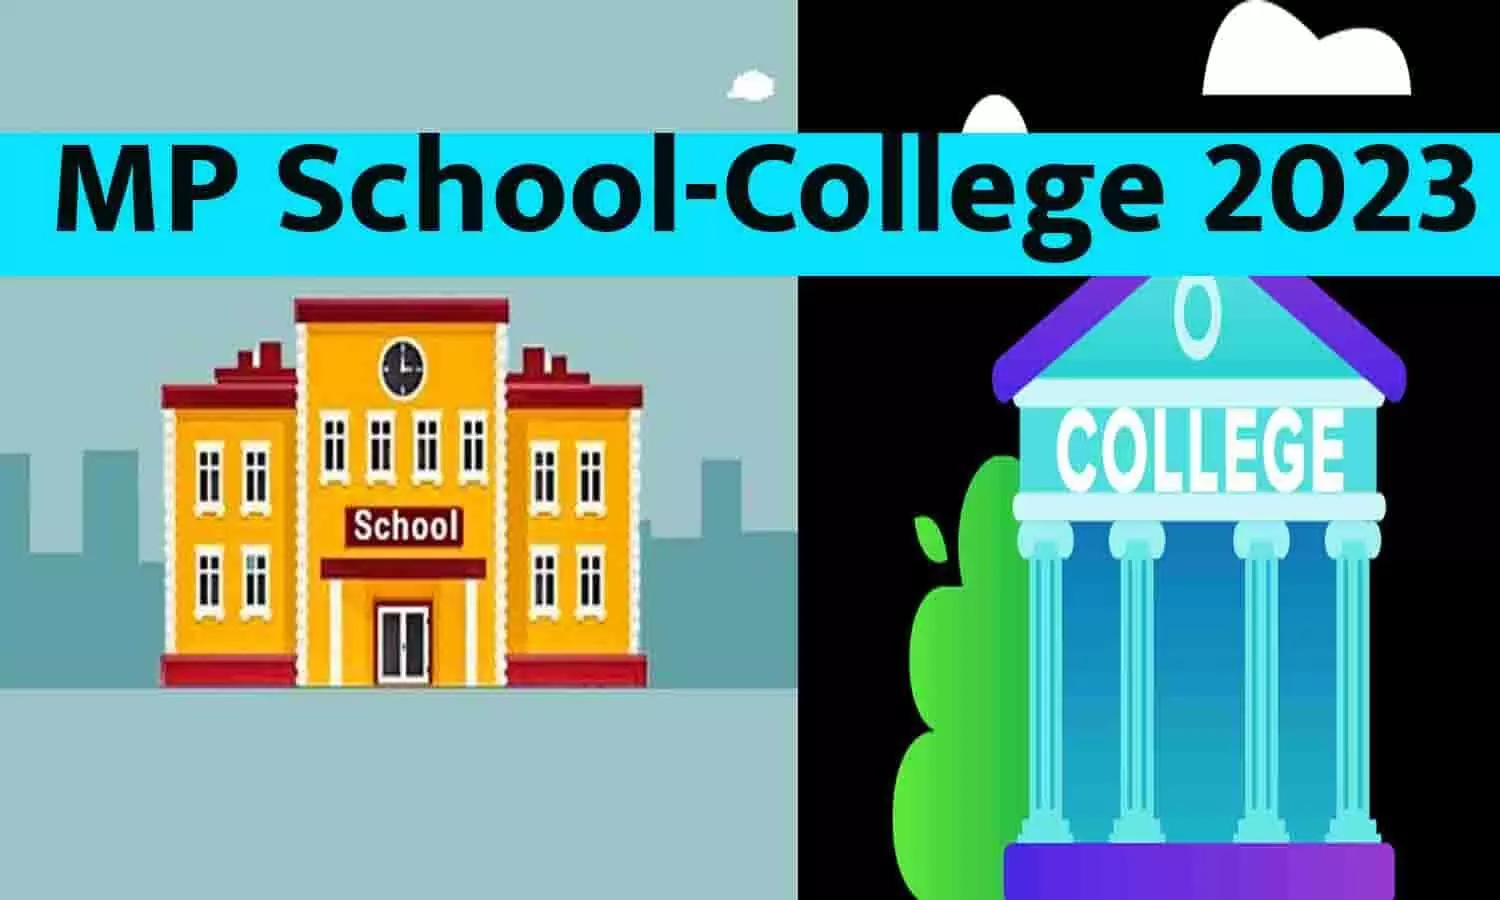 MP School-College News 2023